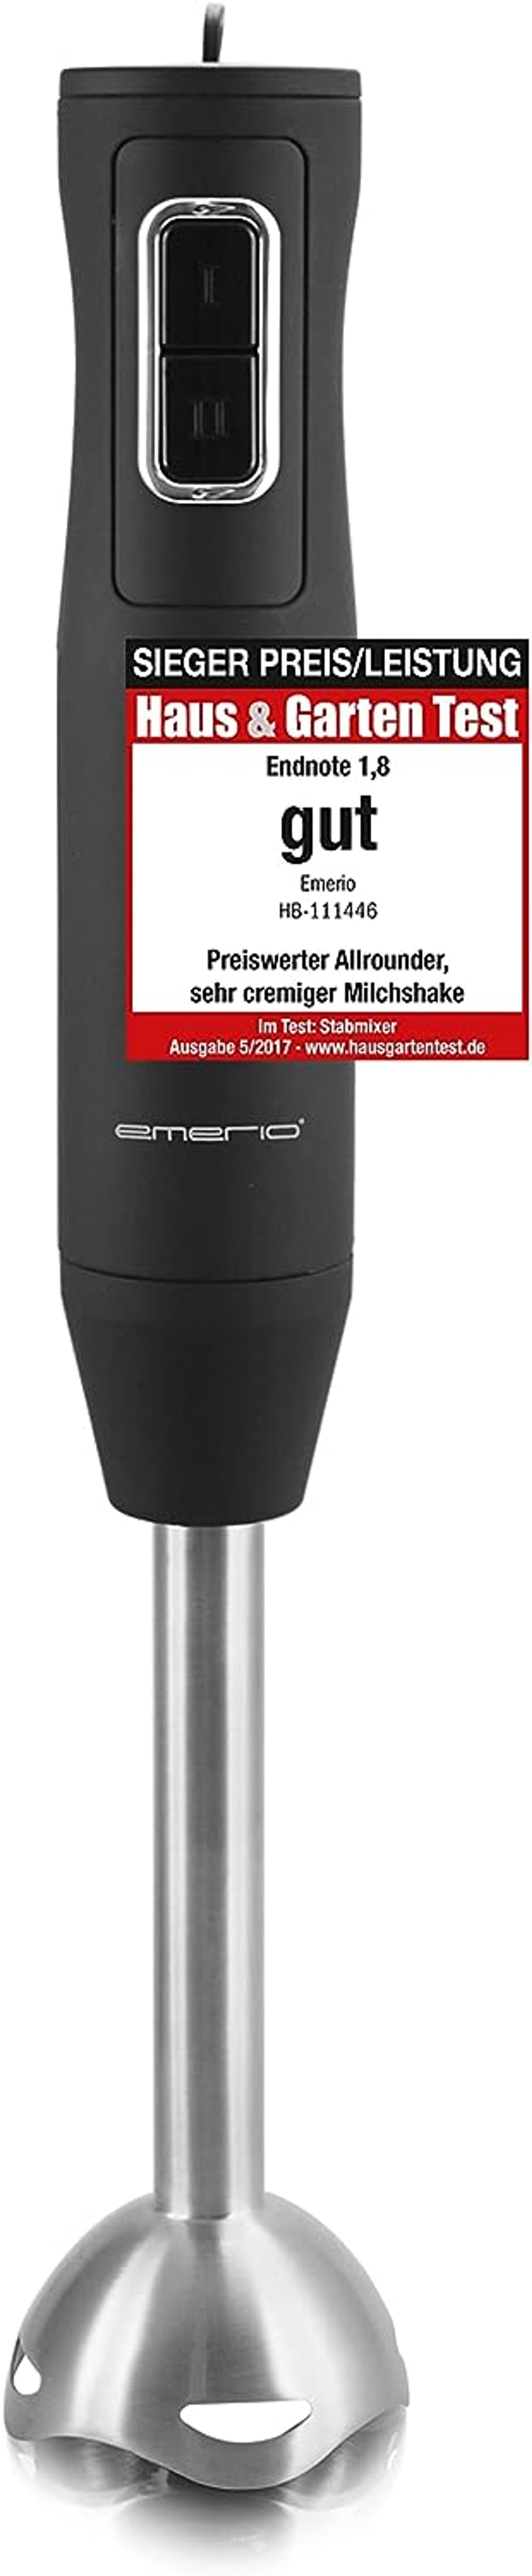 EMERIO HB-111446 STICK MIXER Stabmixer Schwarz/Edelstahl 111446 l) (250 Watt